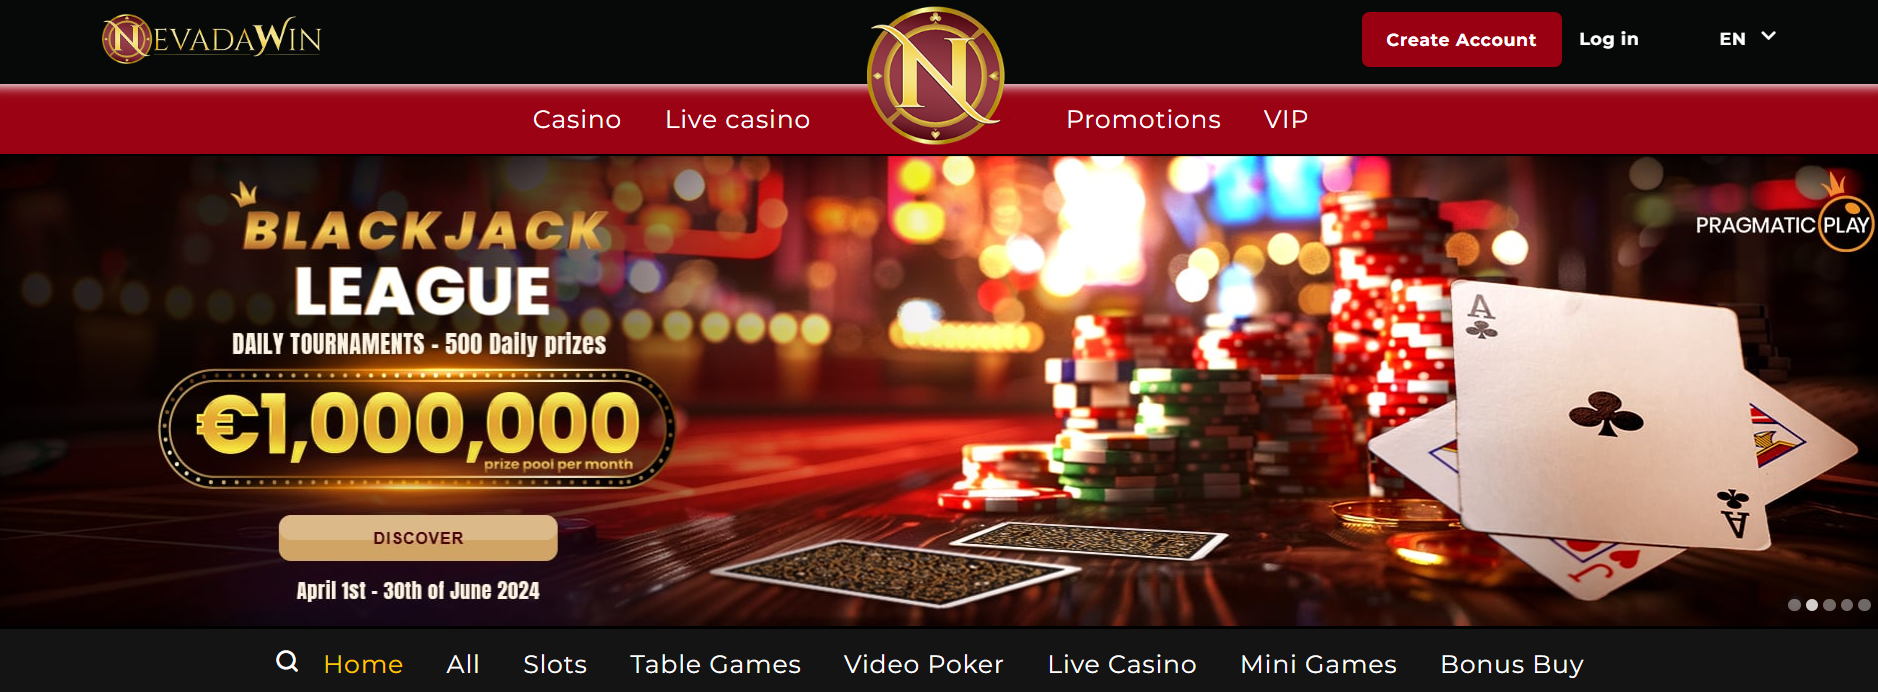 jeux nevada win casino